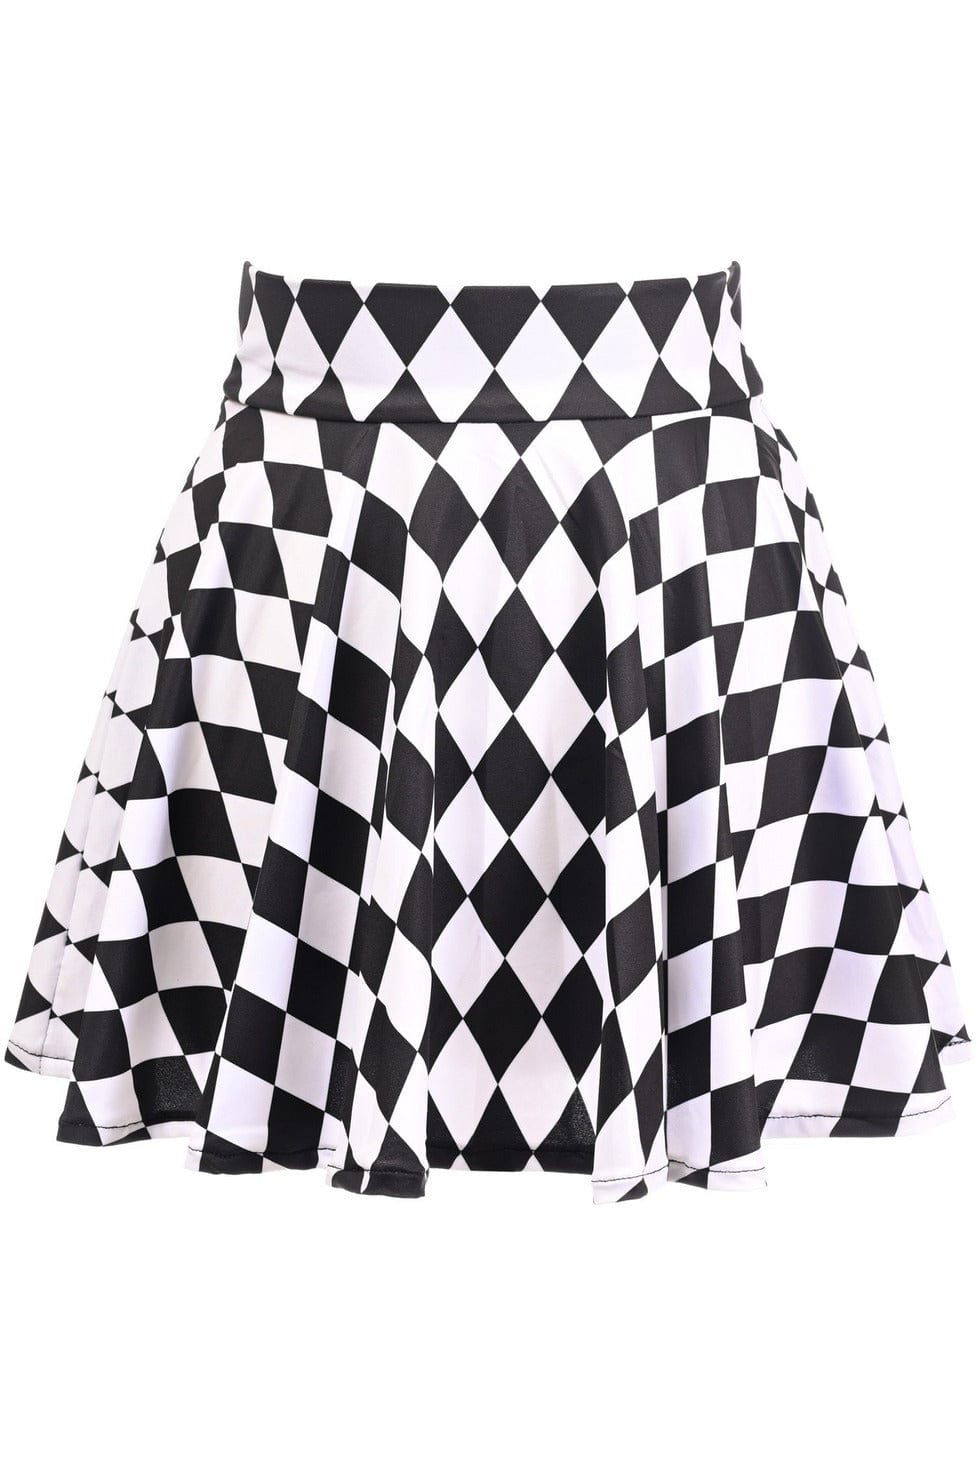 Black With White Diamond Print Stretch Lycra Skirt Musotica.com